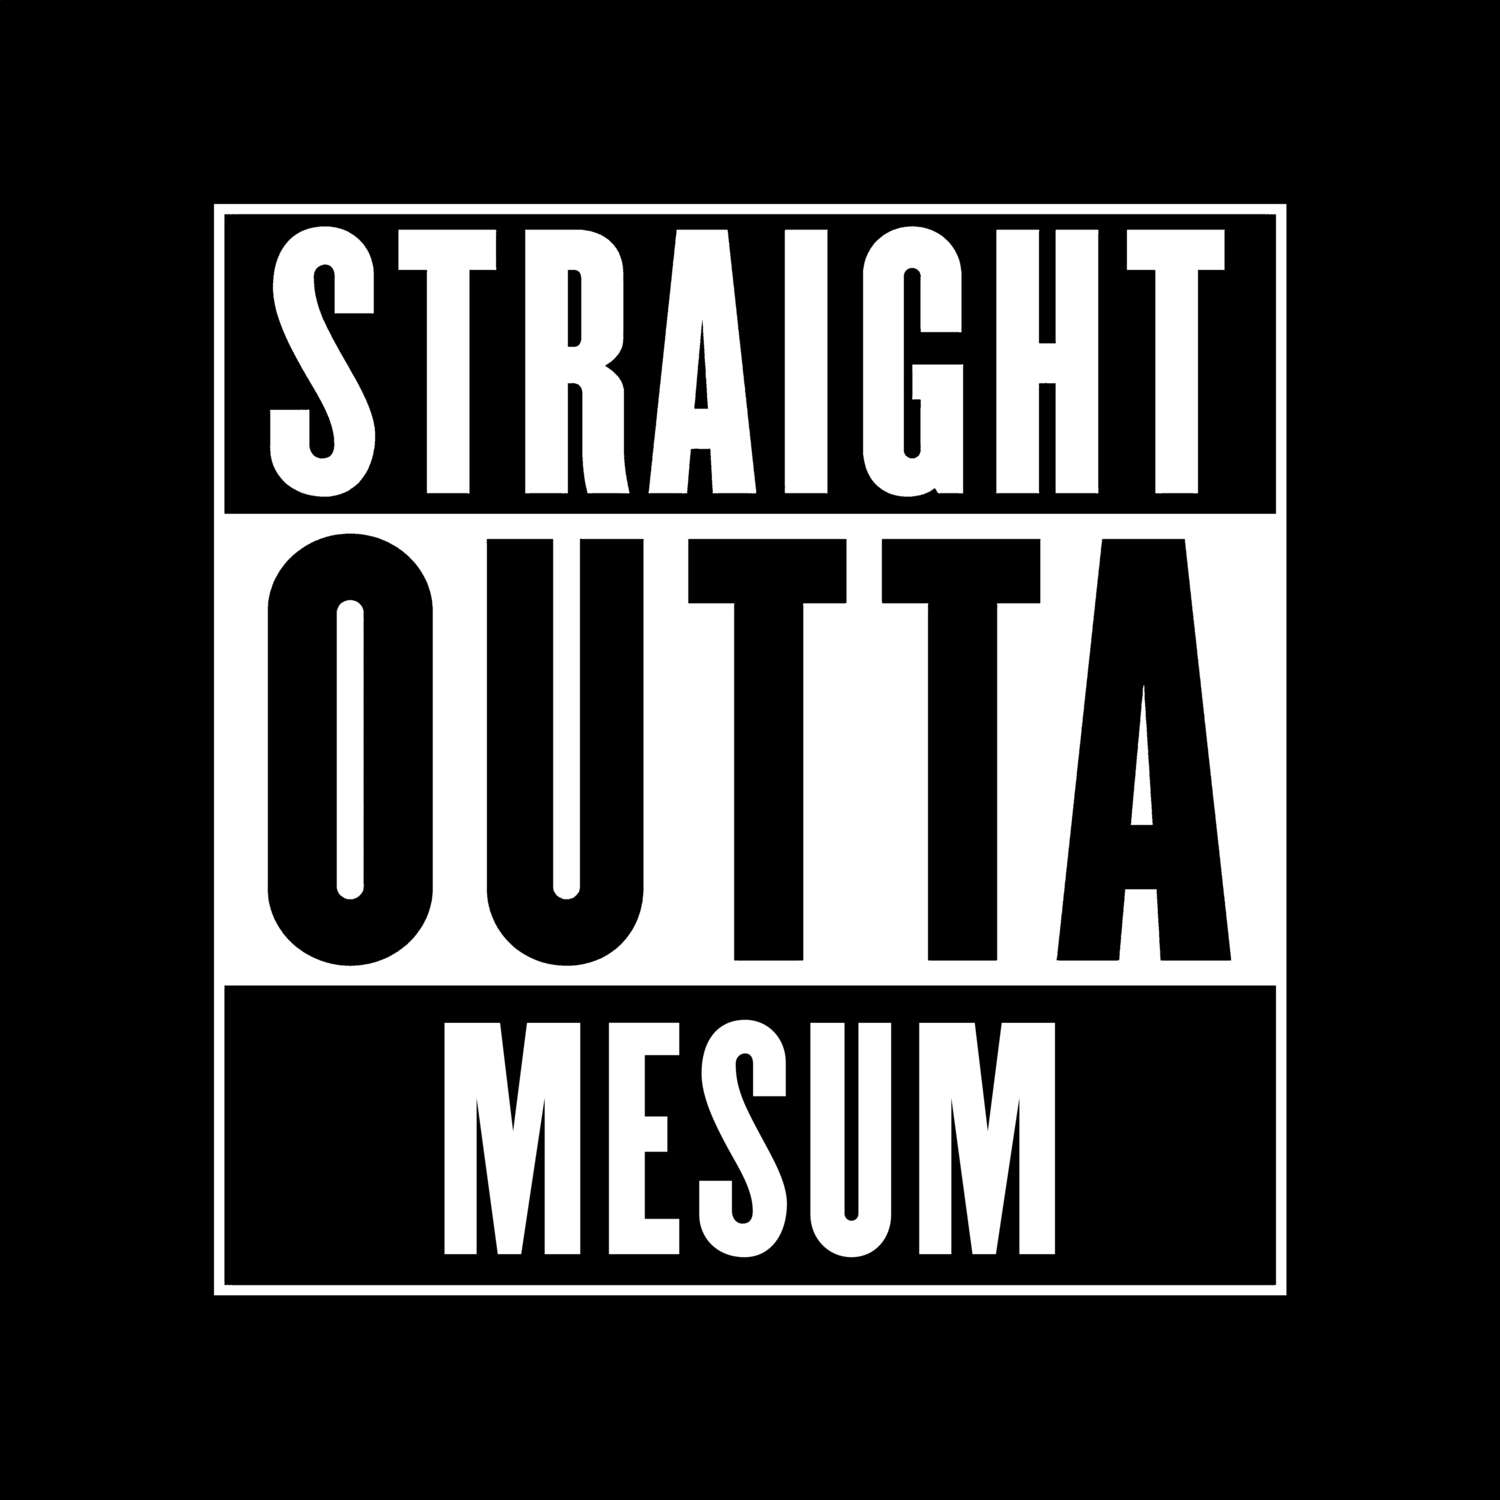 Mesum T-Shirt »Straight Outta«